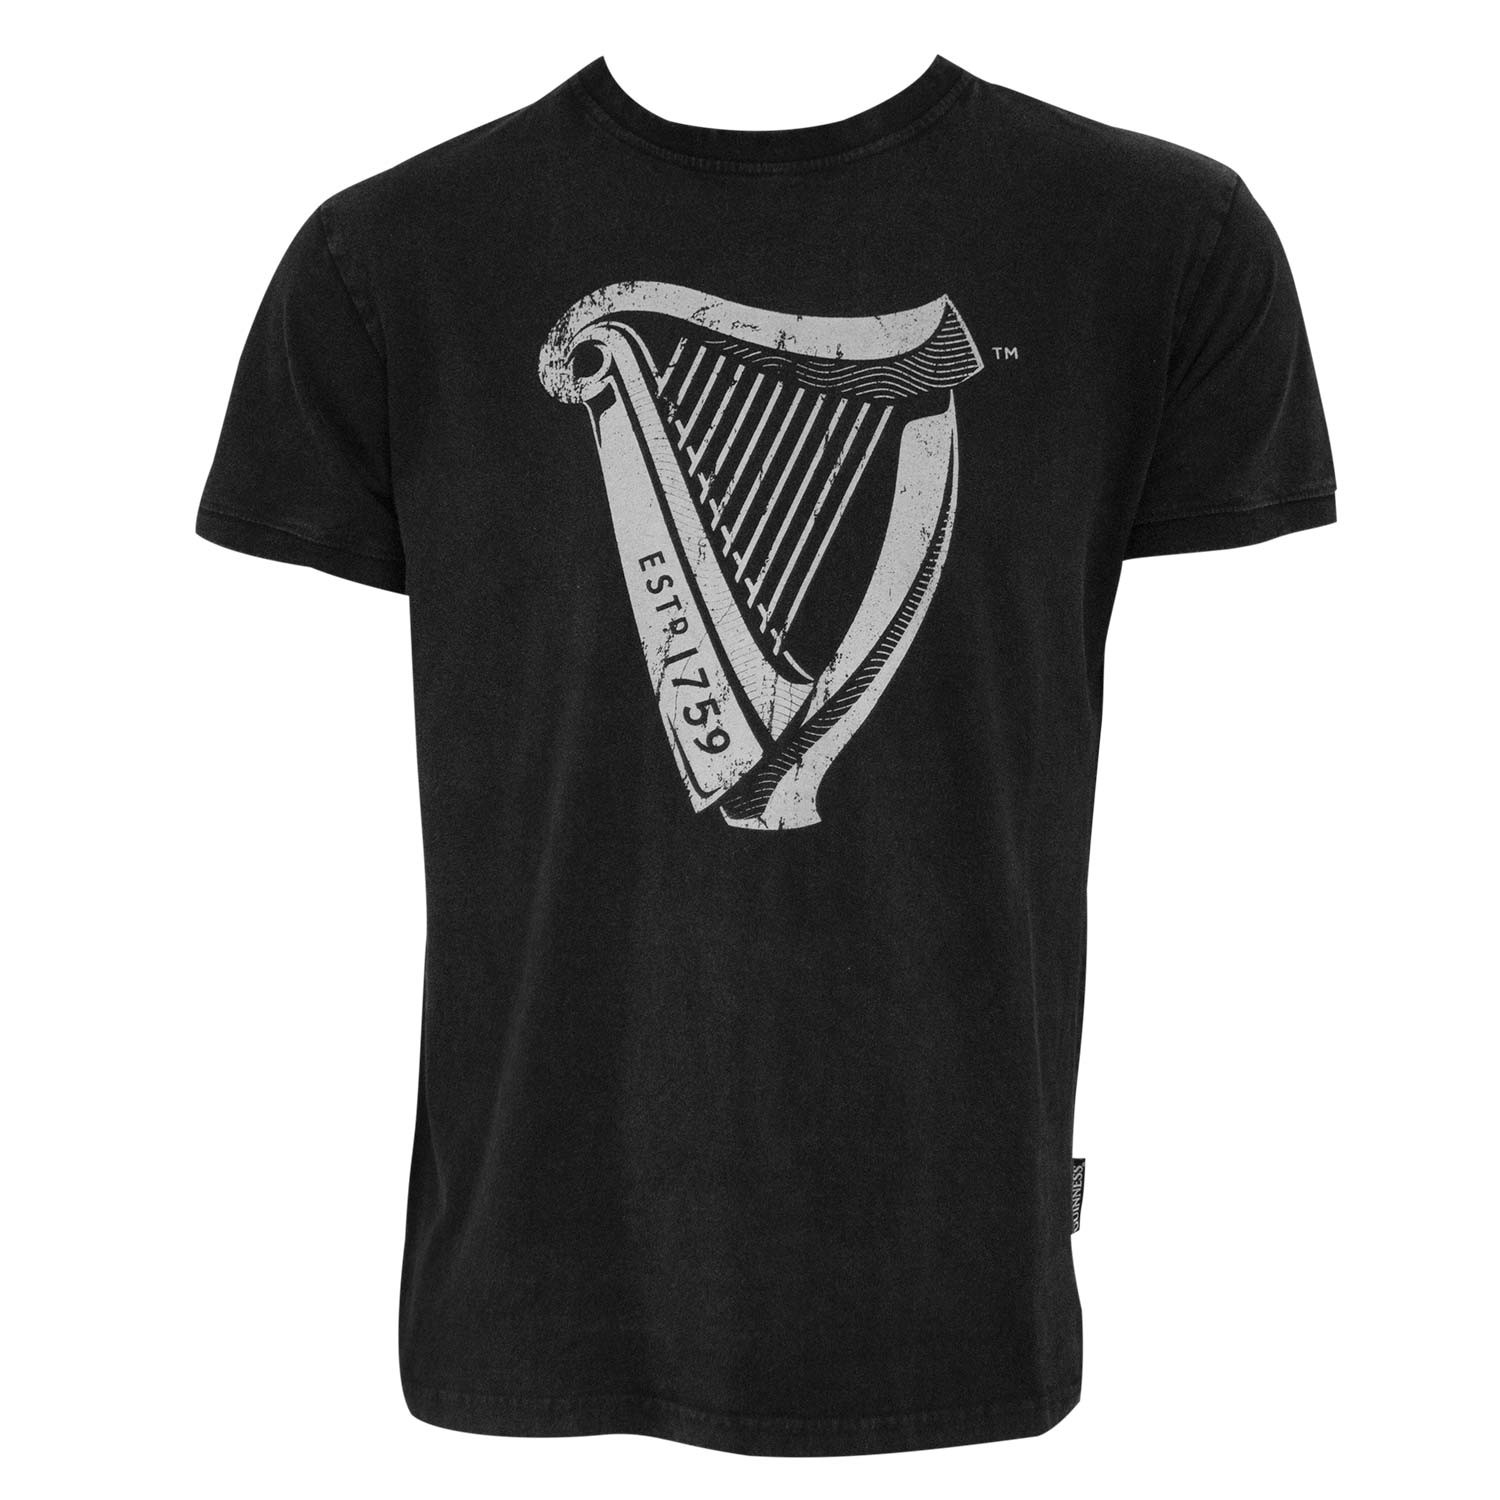 Guinness Distressed Harp Tee Shirt